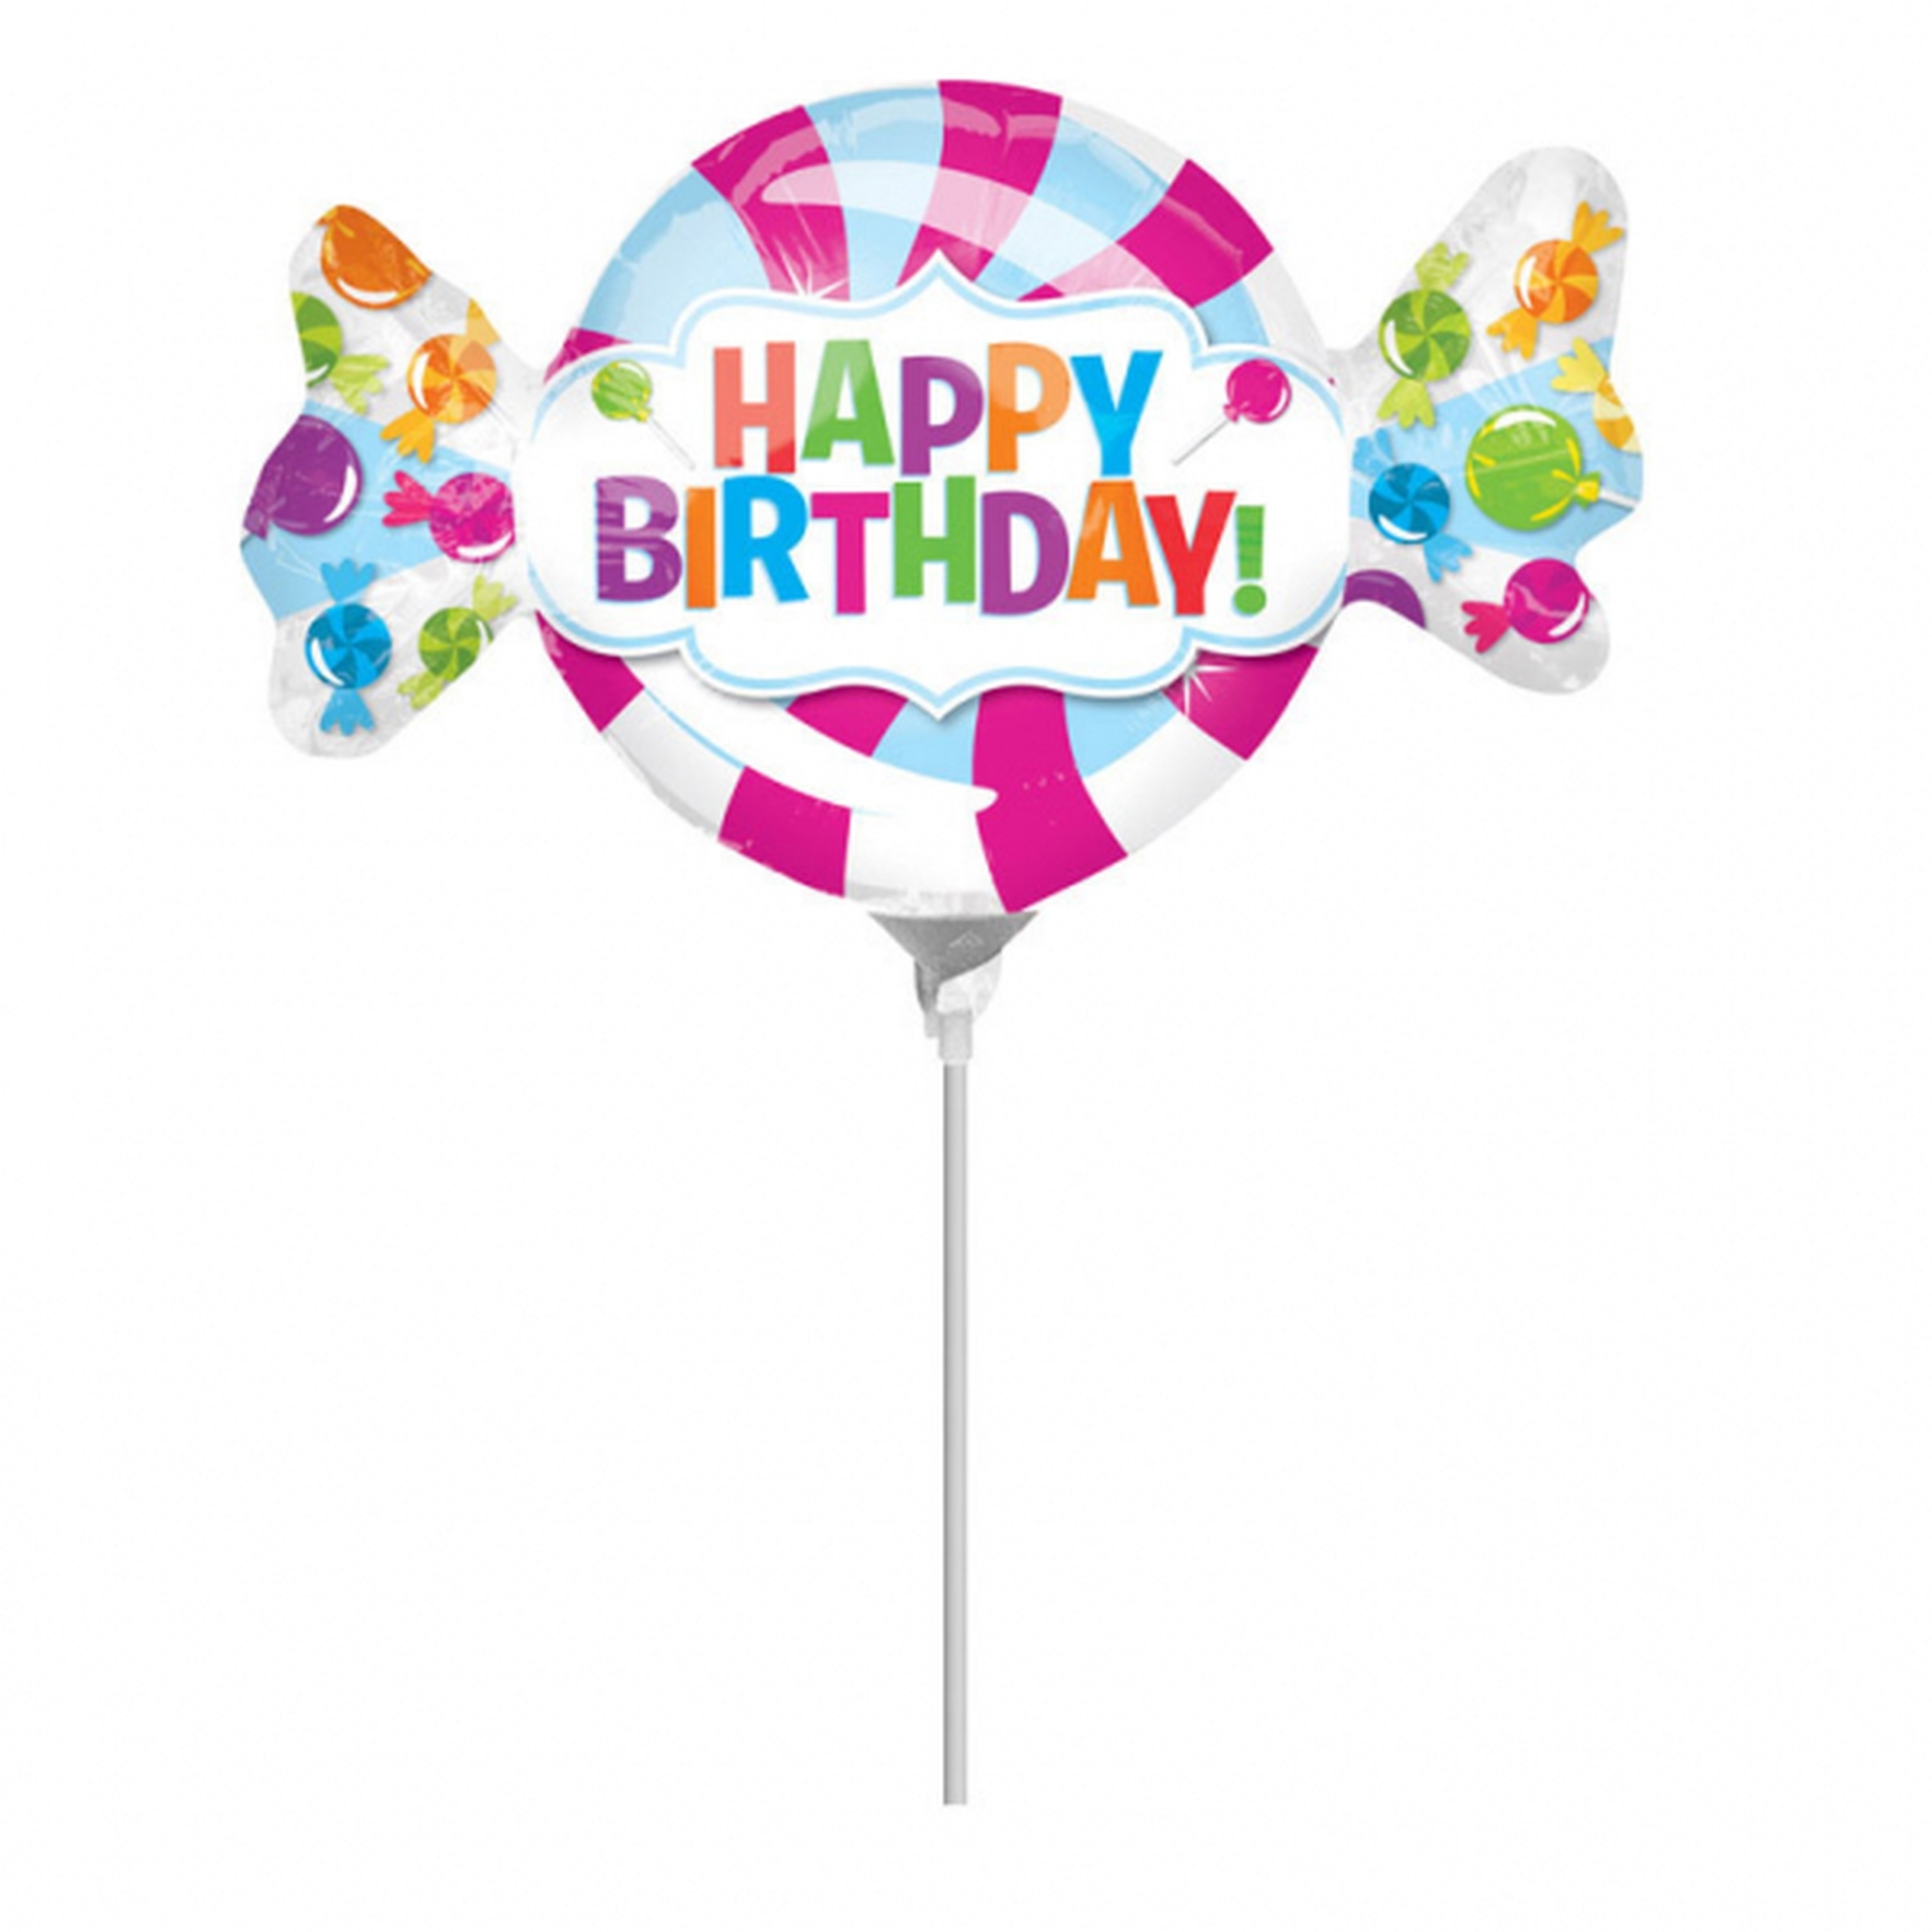 Folienballon Minishape "Happy Birthday Bonbon" luftbefüllt